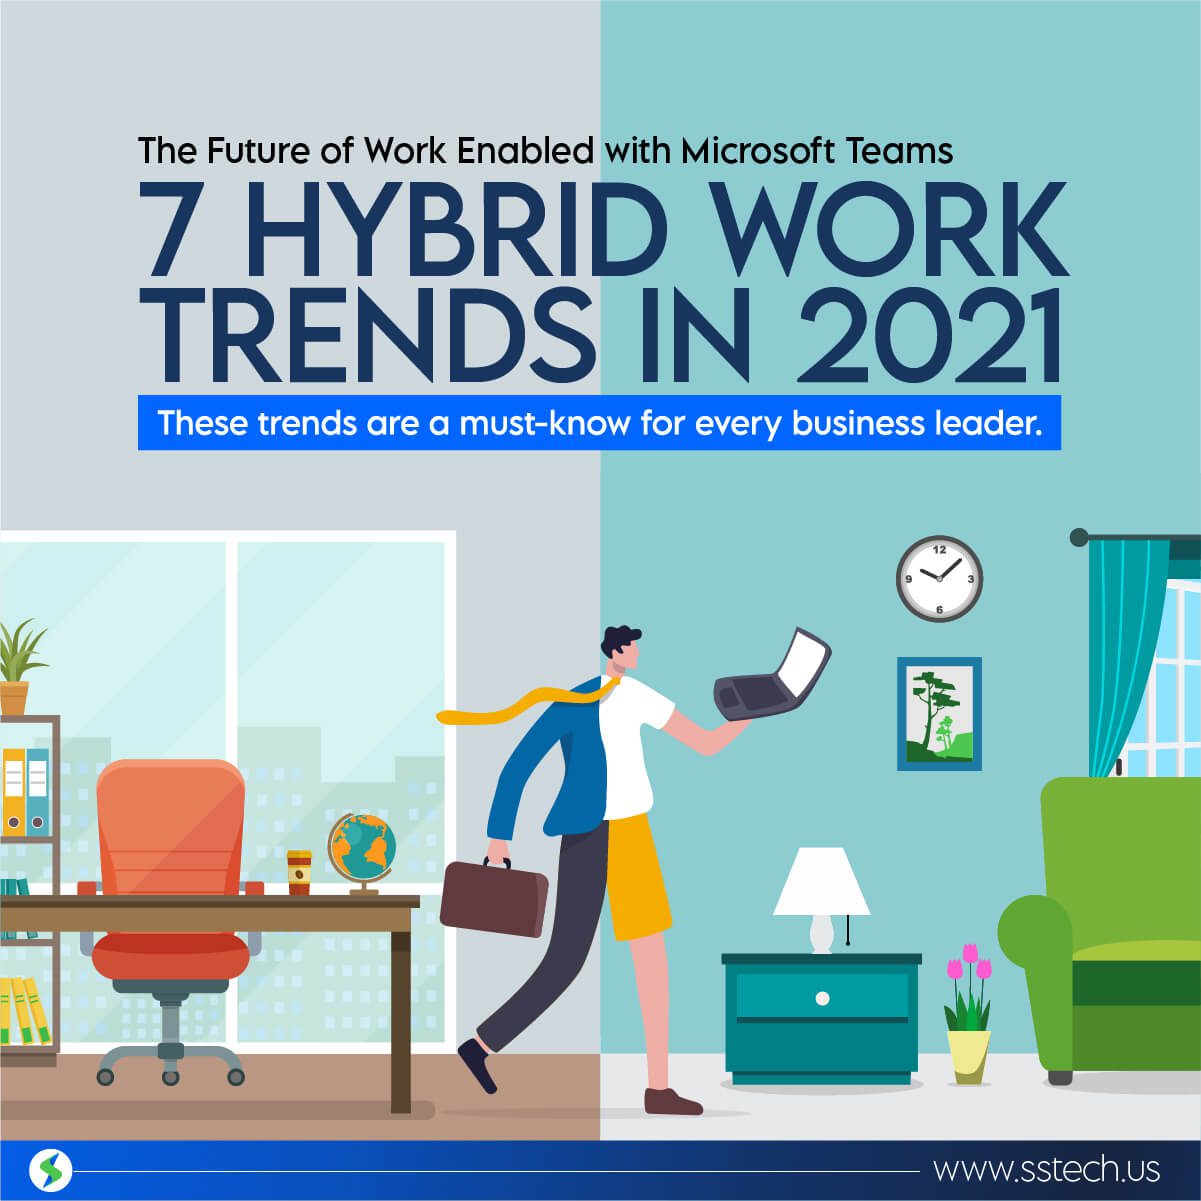 7 hybrid work trends in 2021 graphical slide